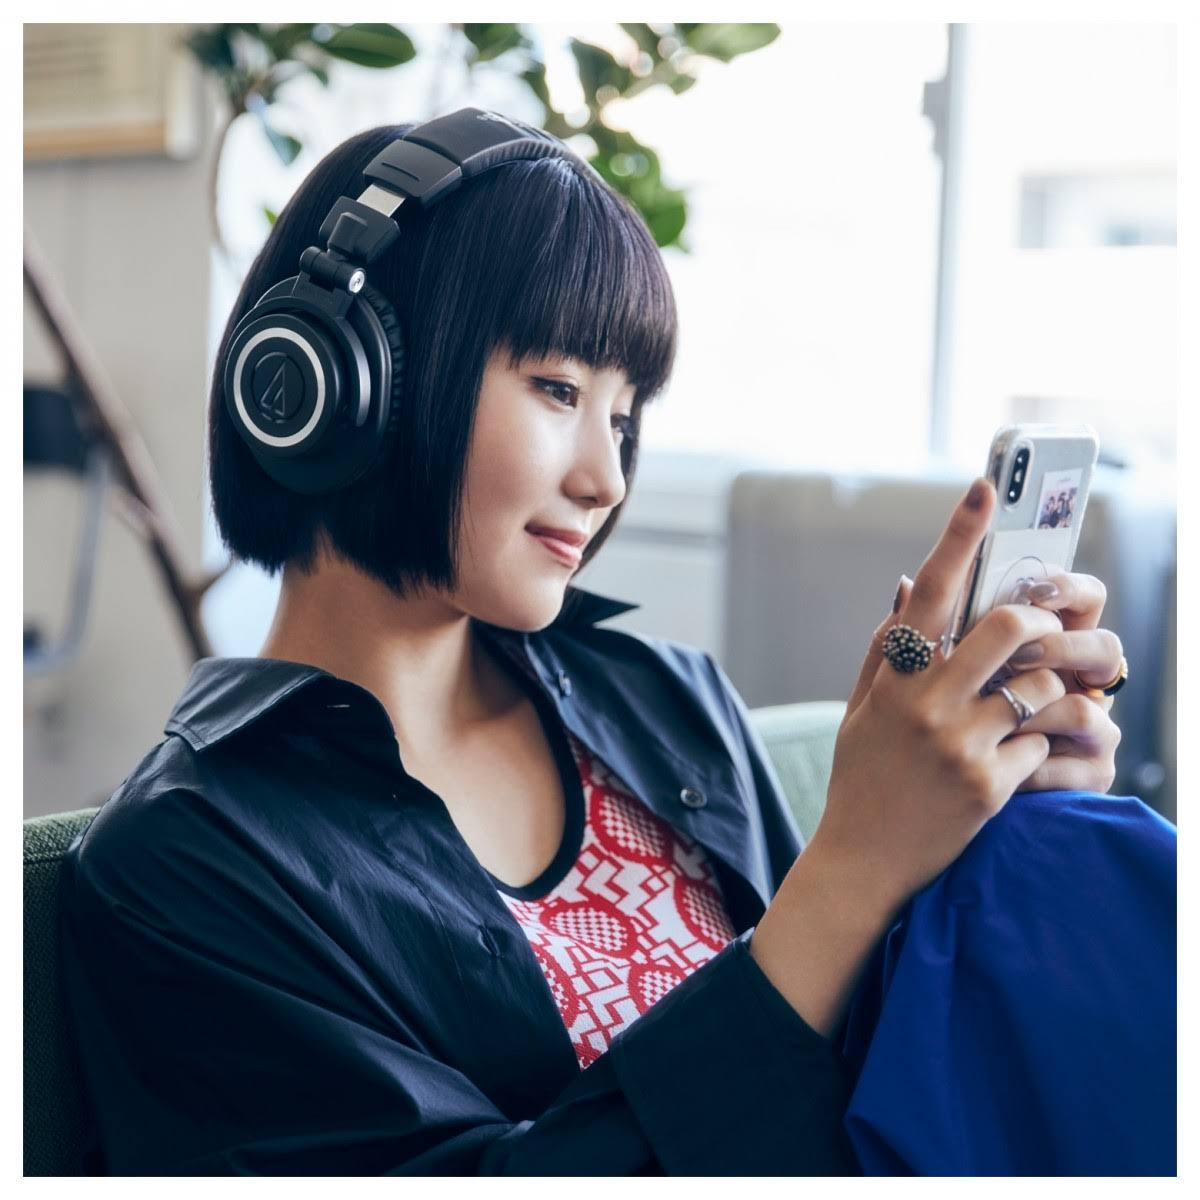 Headphones Bluetooth Wireless Bluetooth Black Headphones On-ear black, AUDIO-TECHNICA